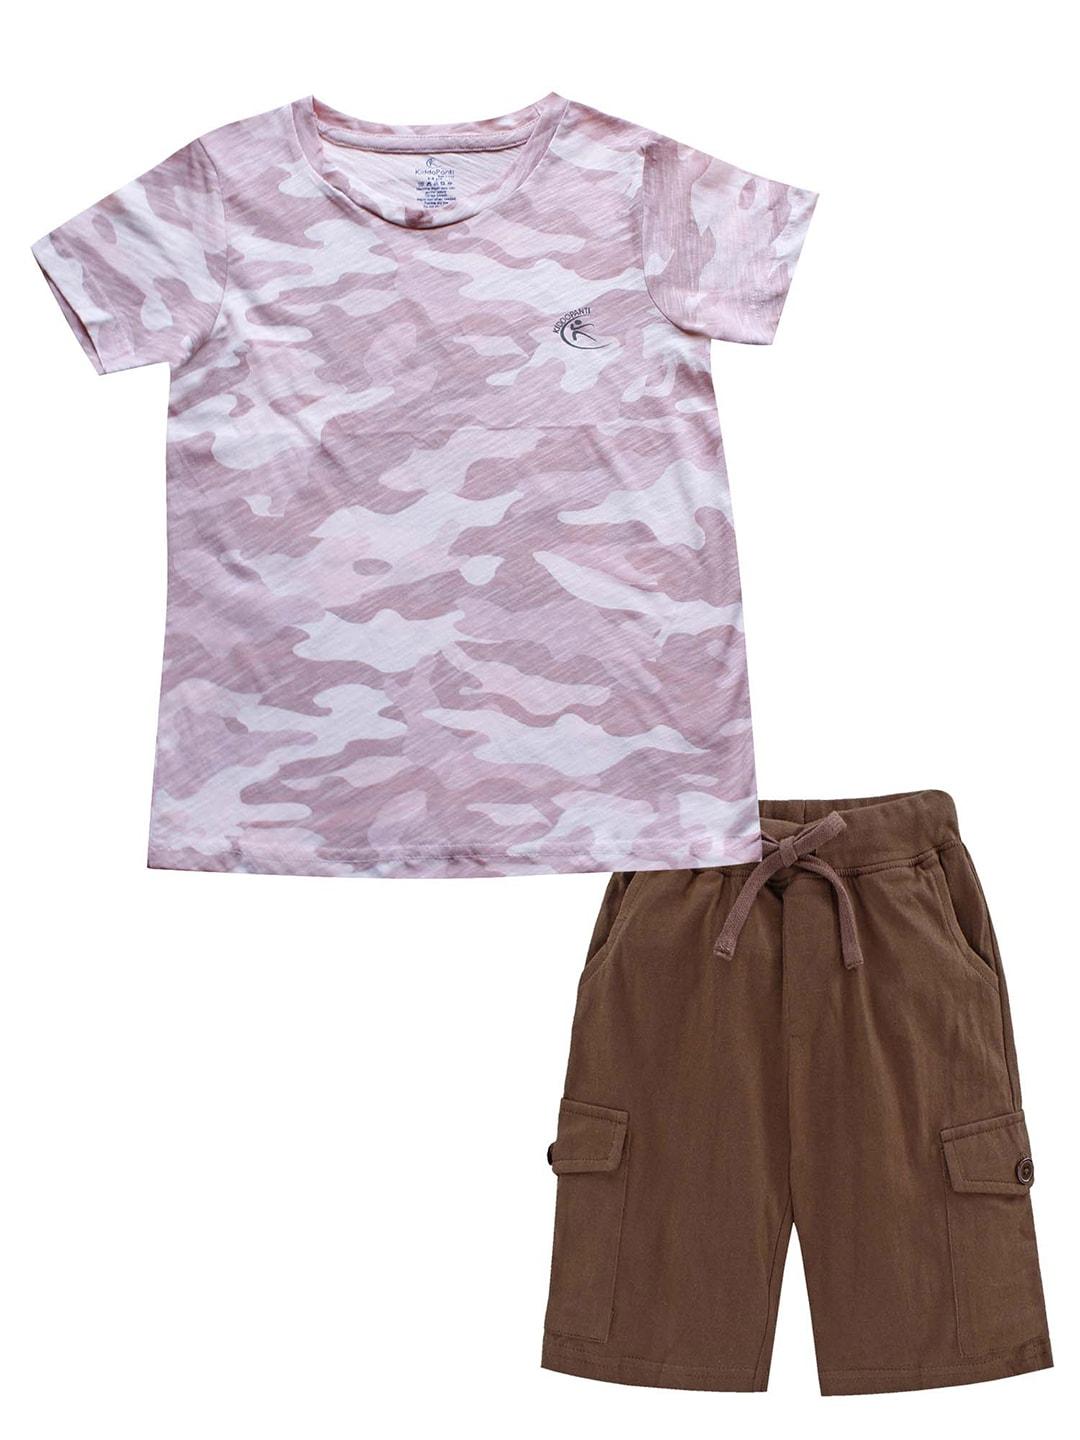 KiddoPanti Boys Grey & Lavender Camouflage Pure Cotton T-shirt with Shorts